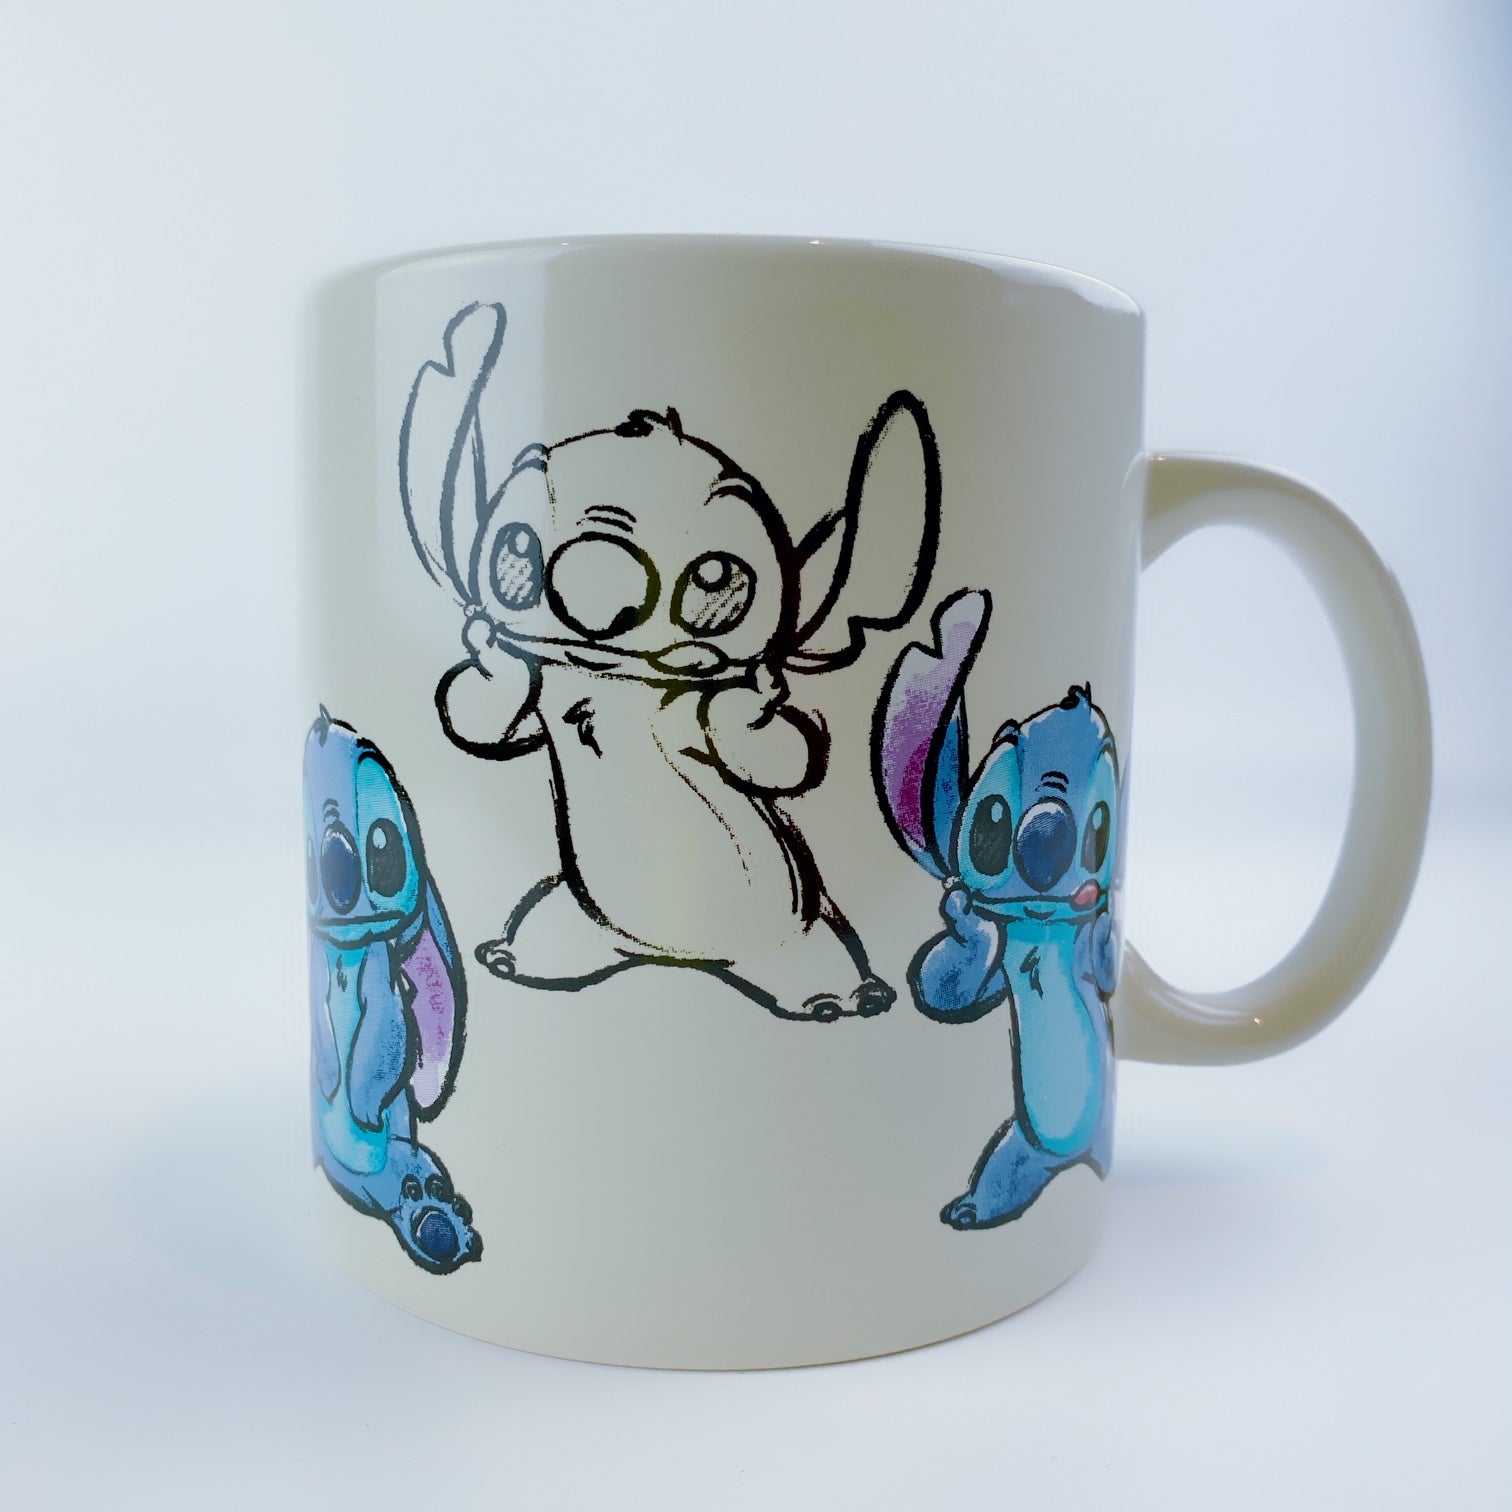 Stitch Blue Mug, Lilo & Stitch